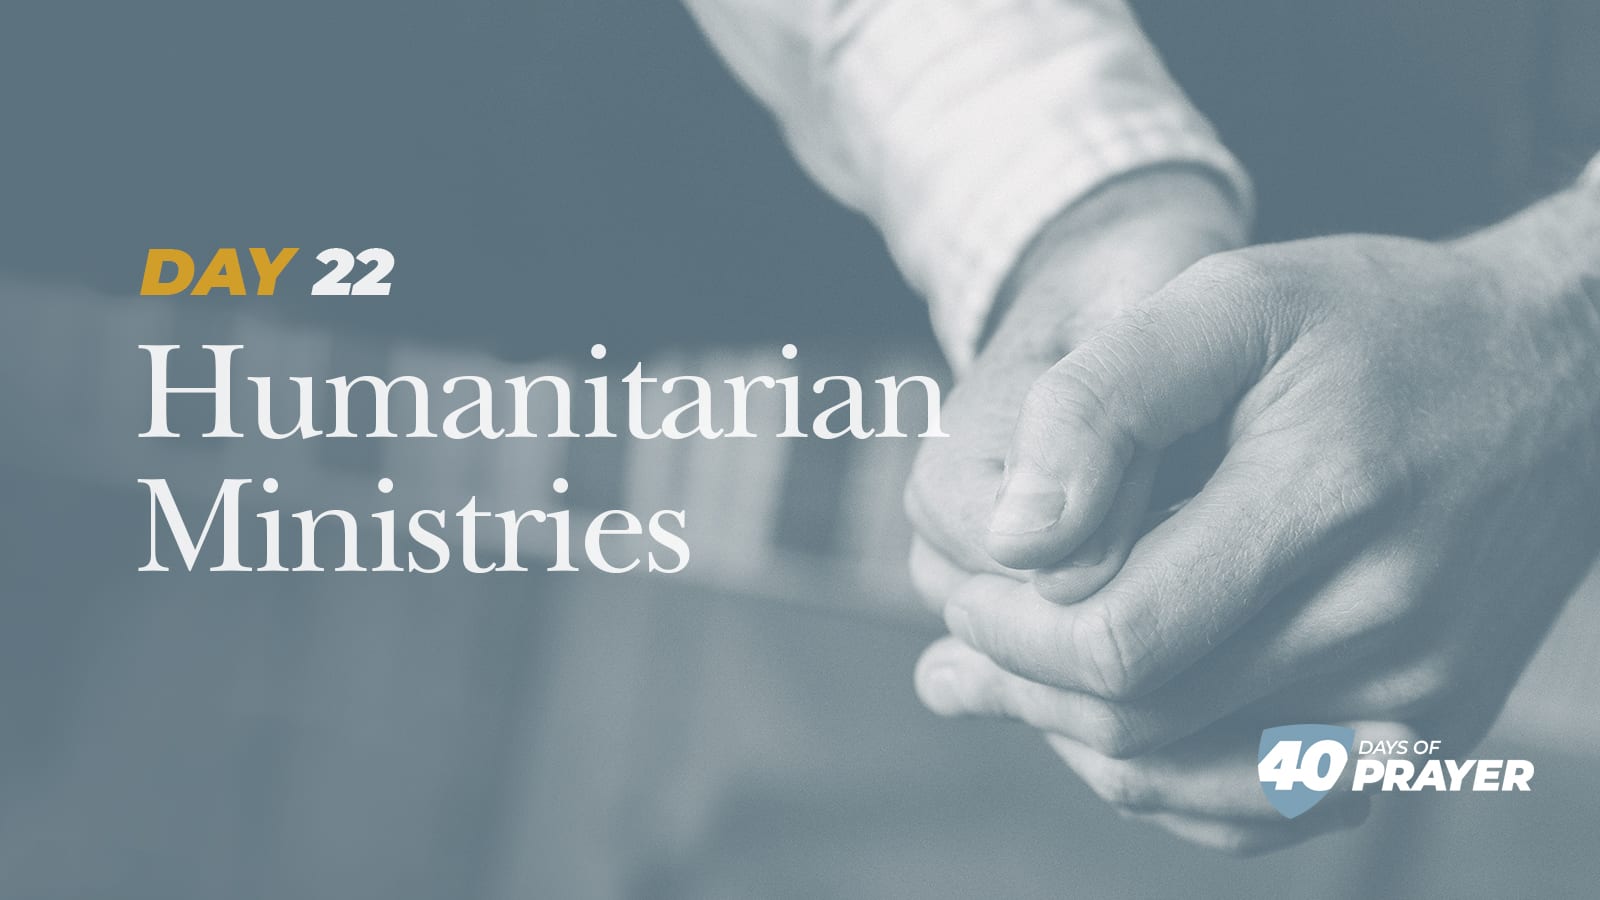 40 days of Prayer Day 22: Humanitarian Ministries